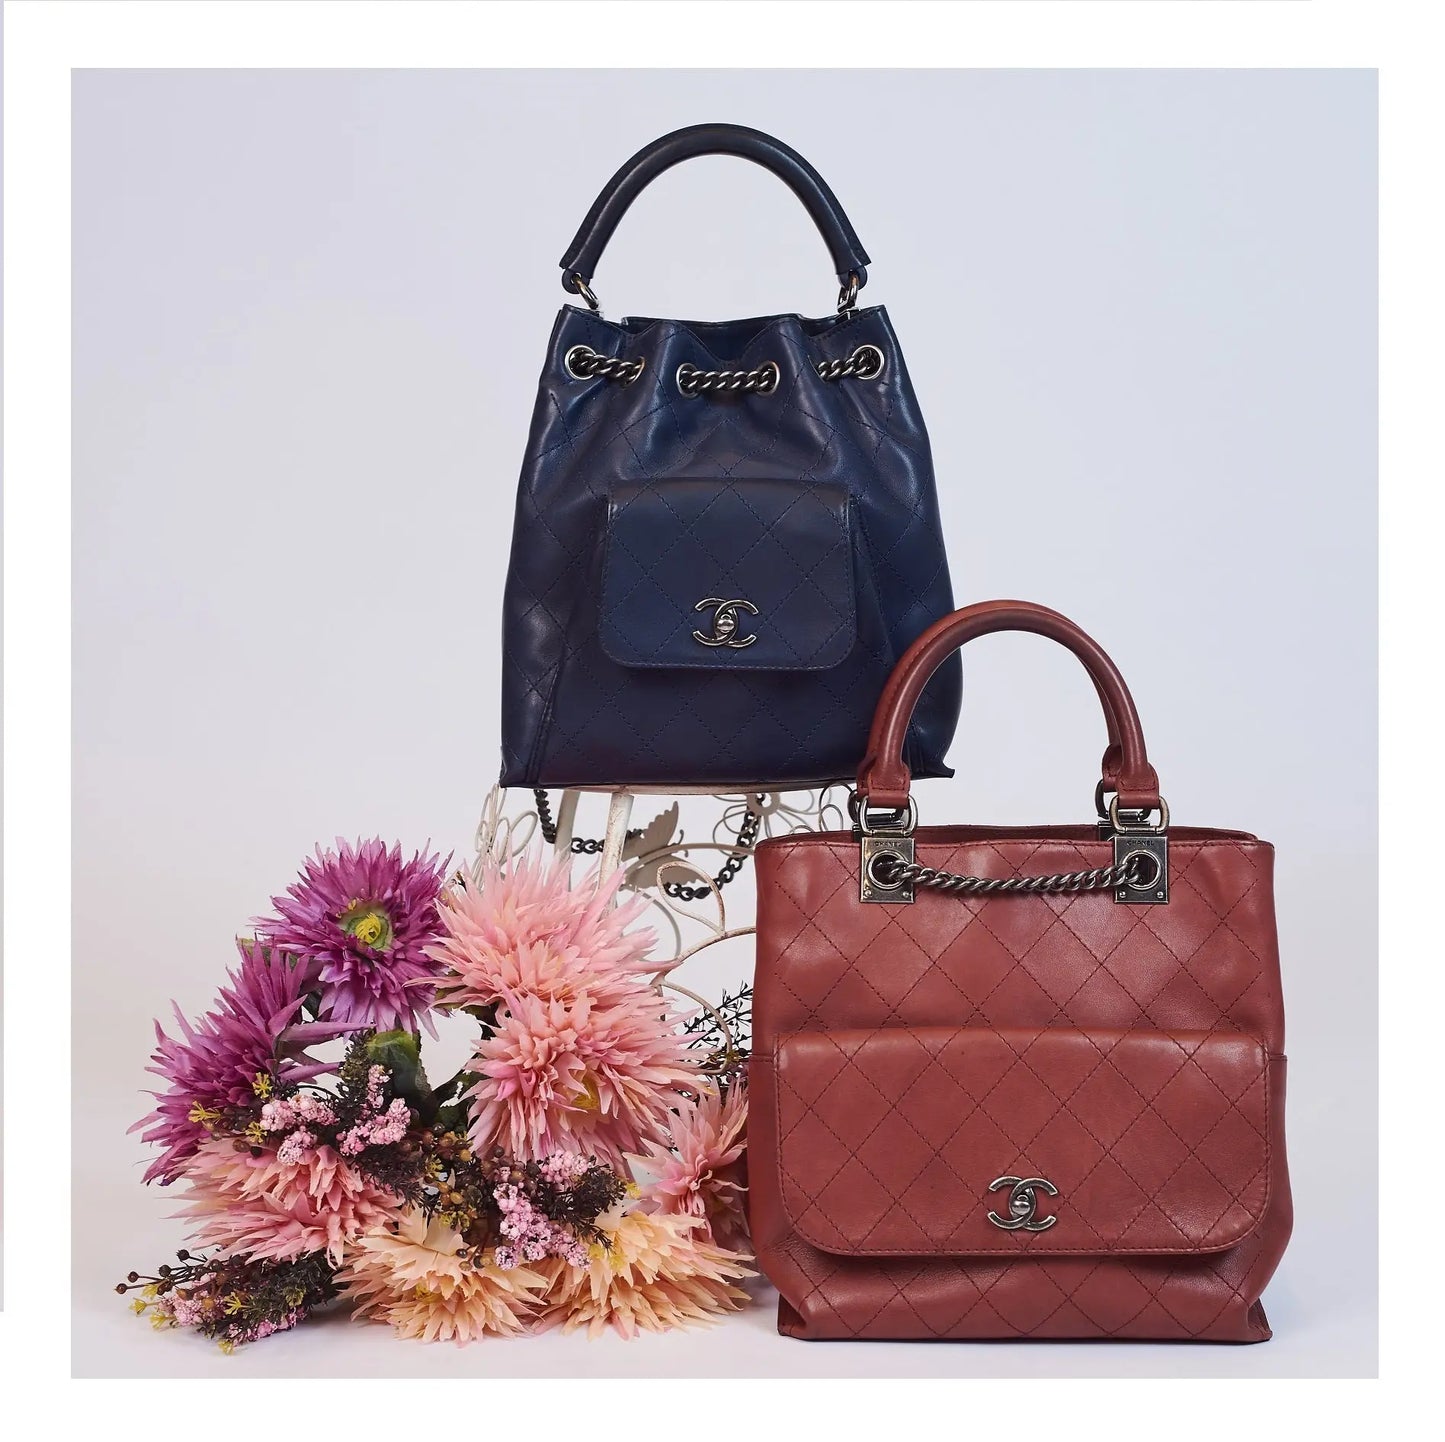 Where Are Chanel Handbags Made? – Bagaholic